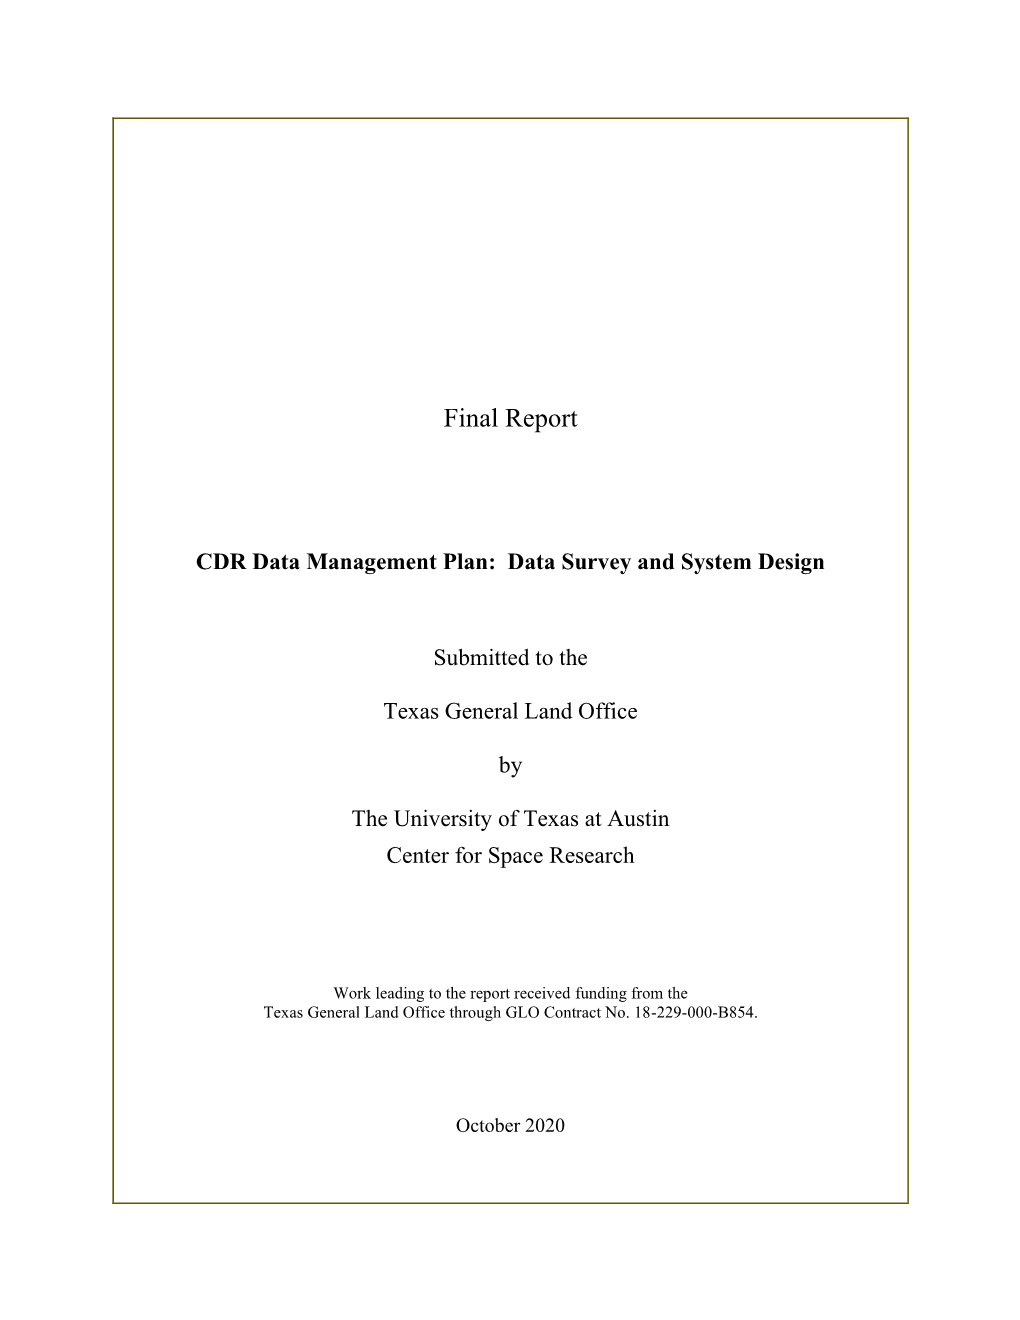 CDR Data Management Plan: Data Survey and System Design